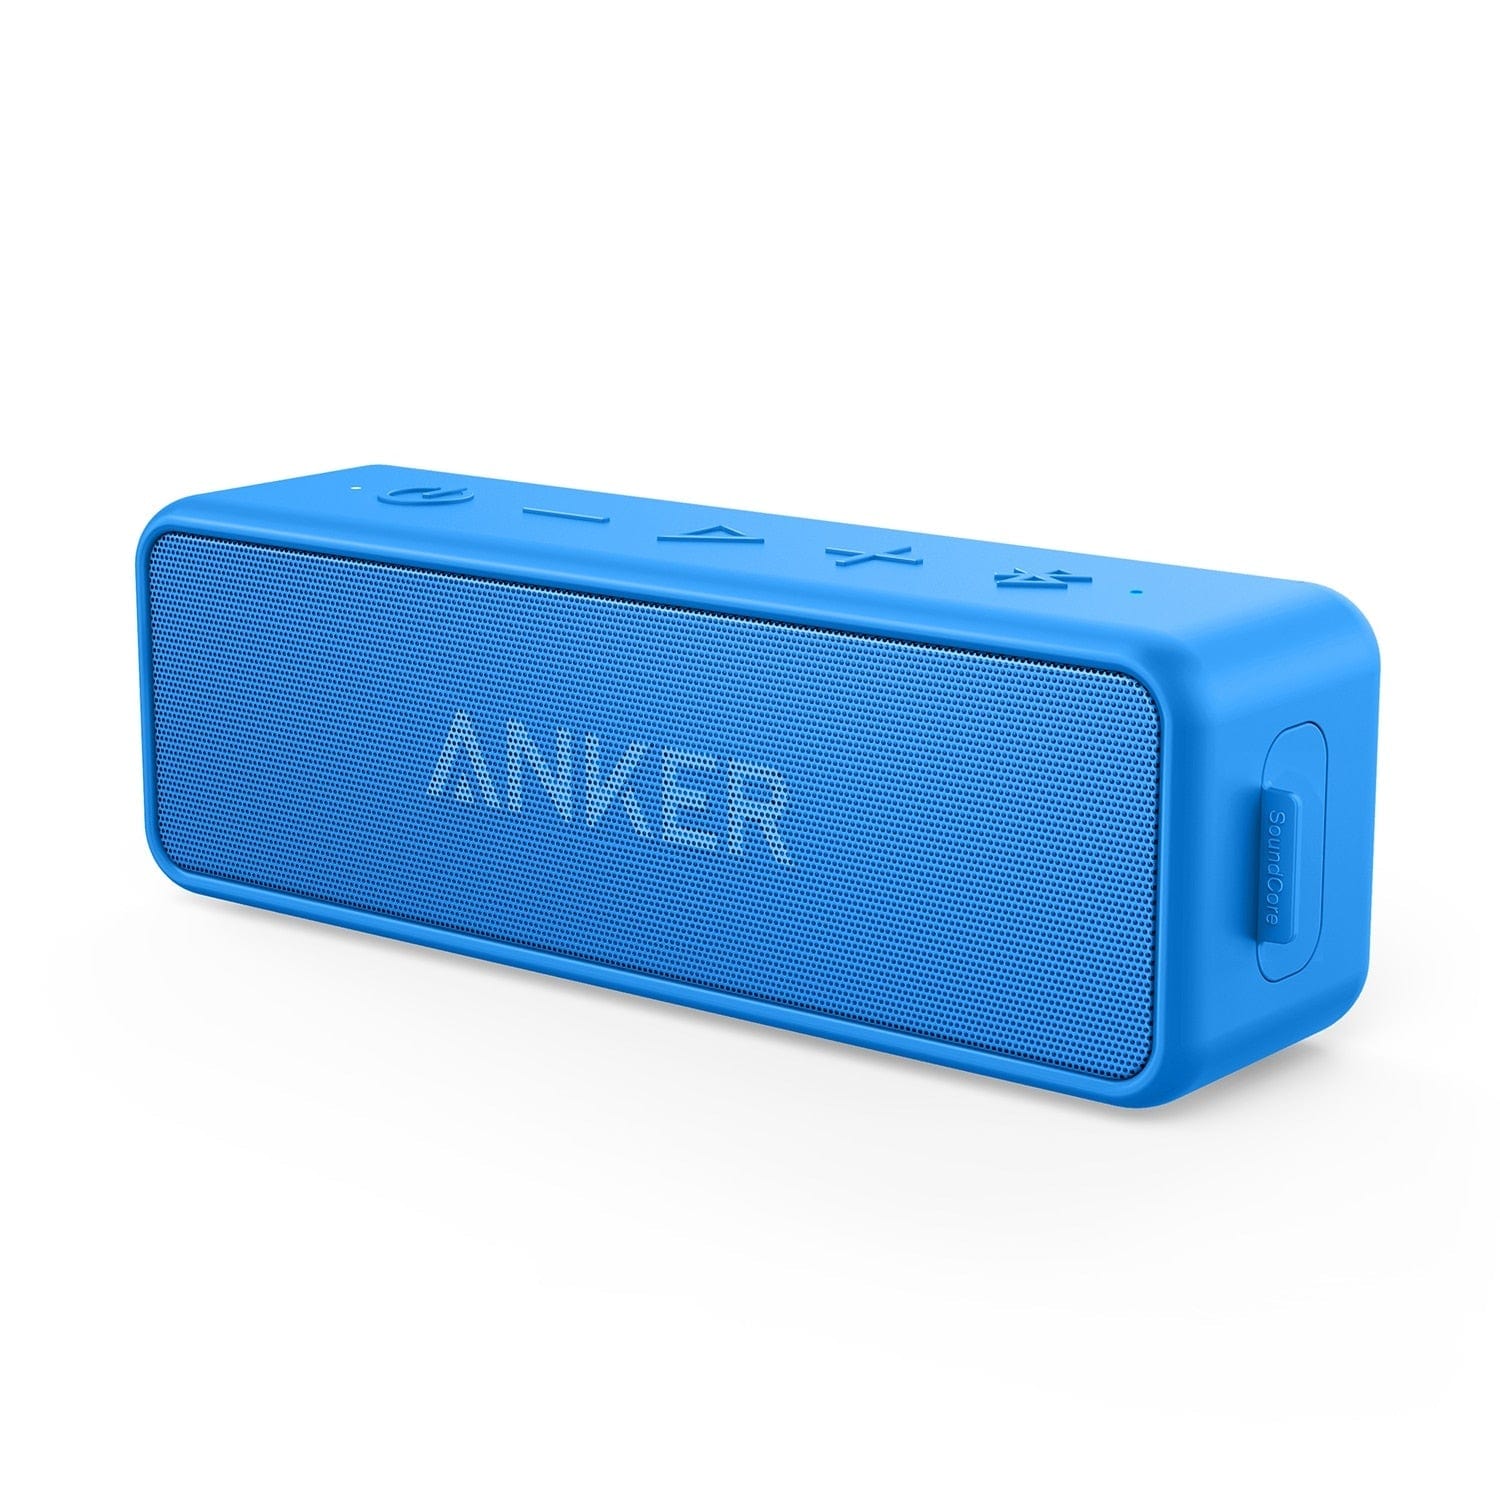 Anker Anker, Speaker, version Soundcore 2, Blue color